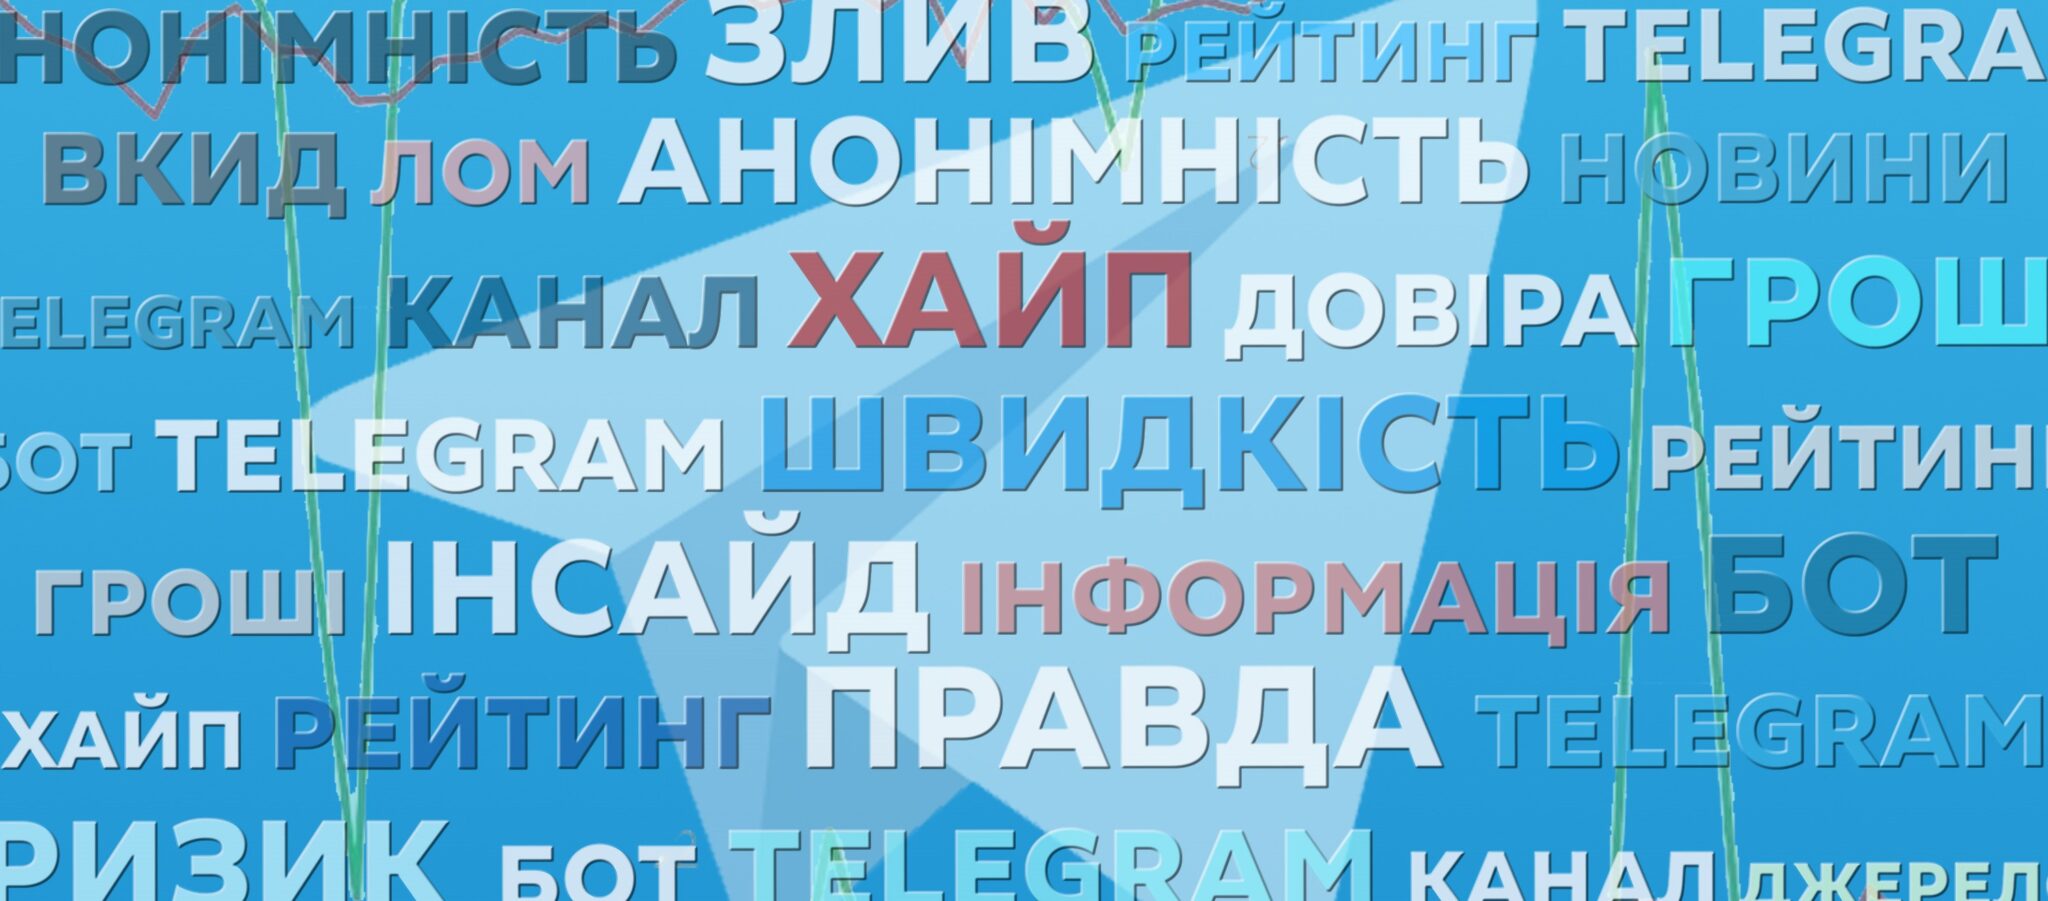 Рейтинг телеграмм каналов россии фото 50